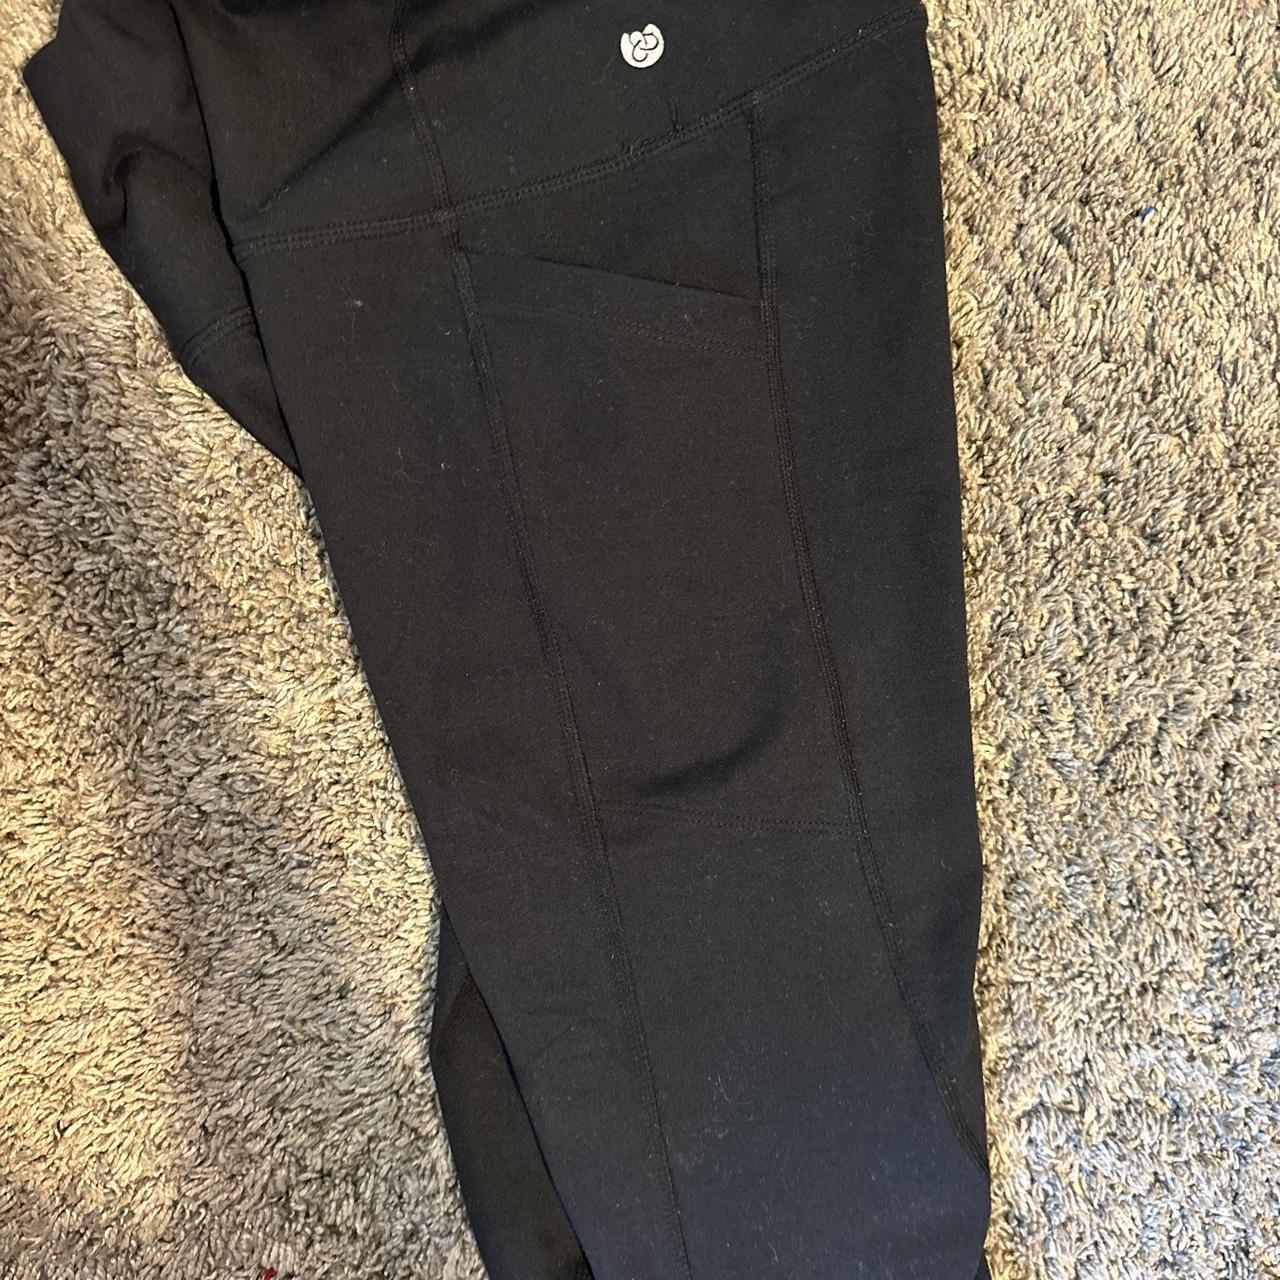 Zella black leggings with side pockets